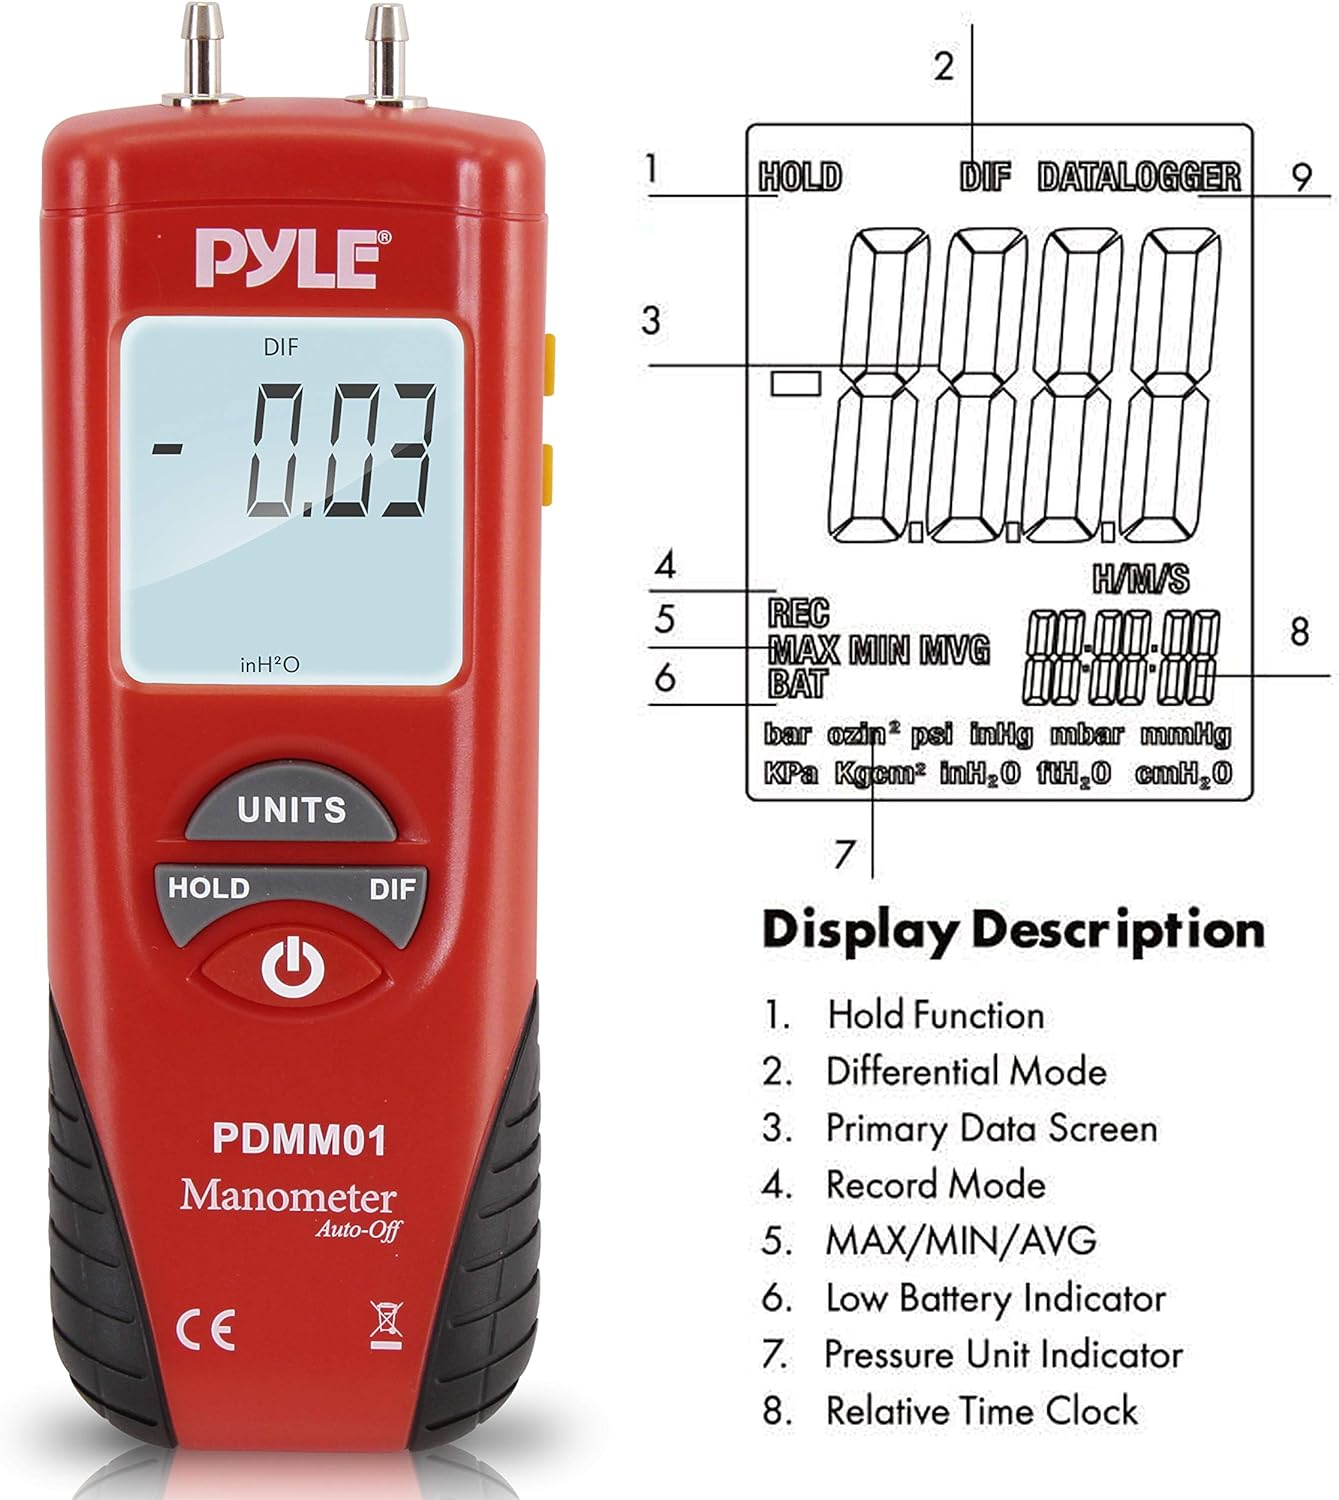 Pyle Meters Manometer 11 Unit of Pressure-Meters Digital Measurement Maximum 10 PSI Data Hold & Error Code Measure Gauge Differential Gas Tester-Large LCD Backlit Dual Display w/Auto Power Off PDMM01